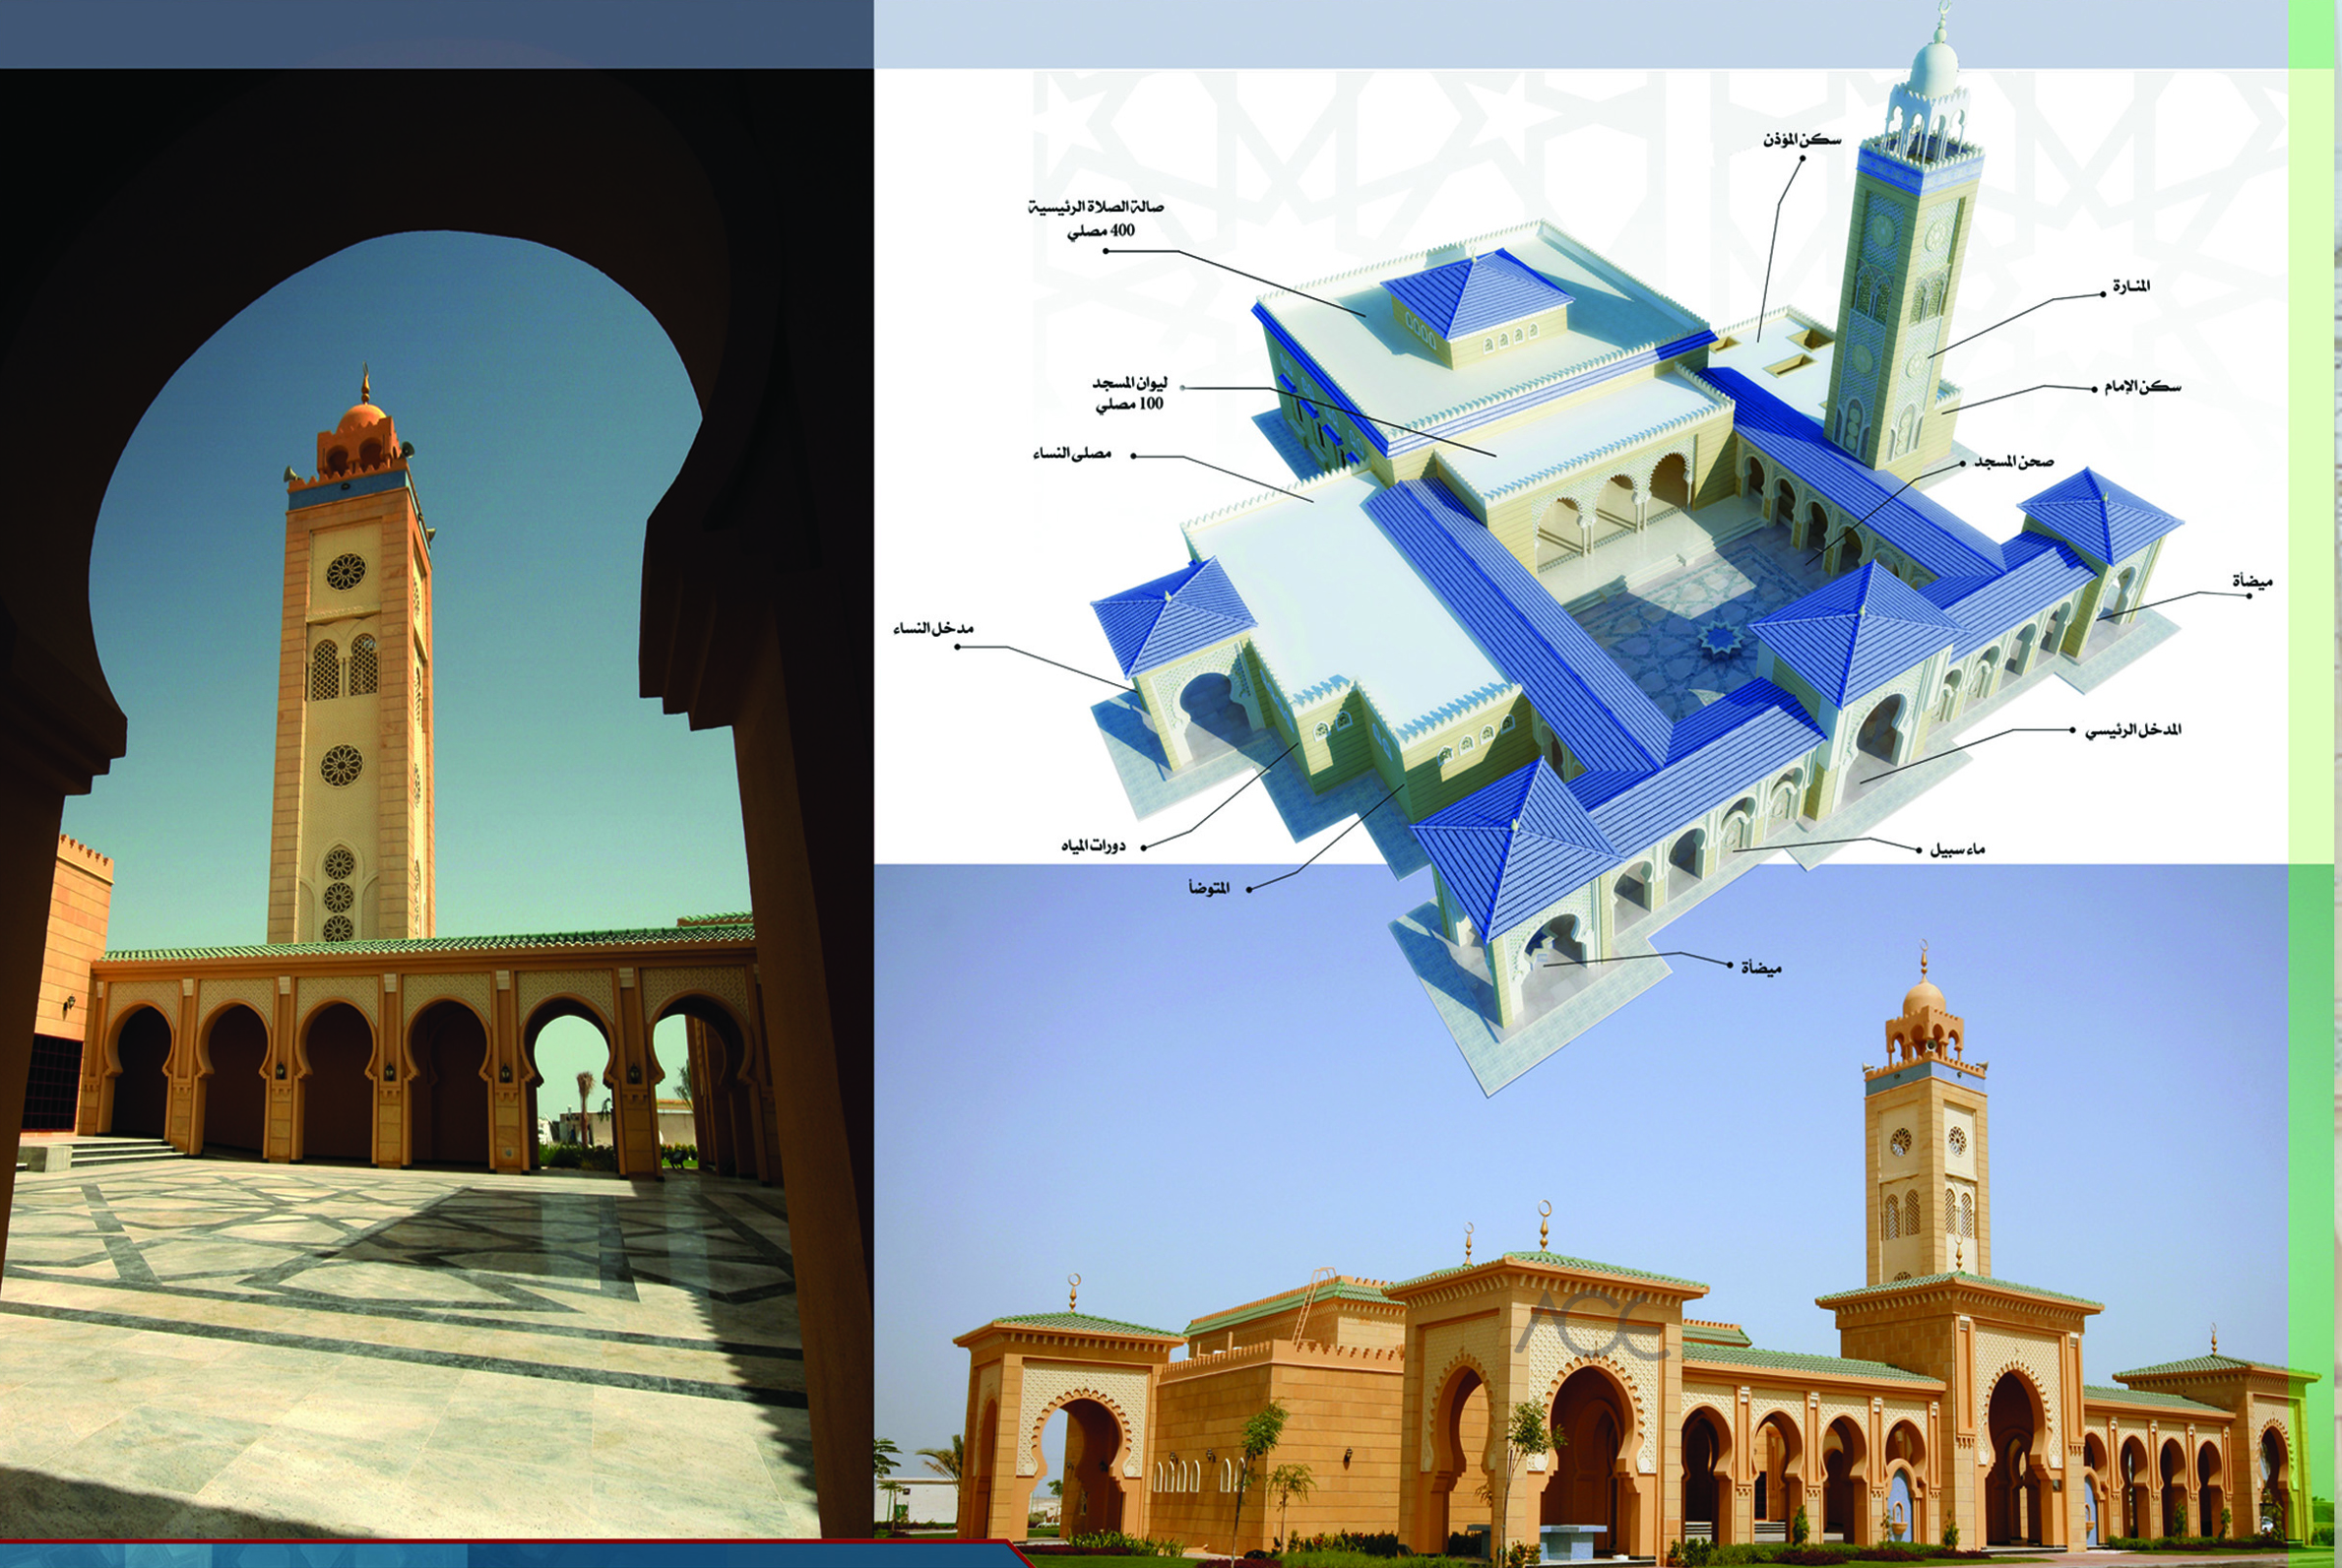 Sh. Mubarak Bin Mohammed AI Nahyan Mosque